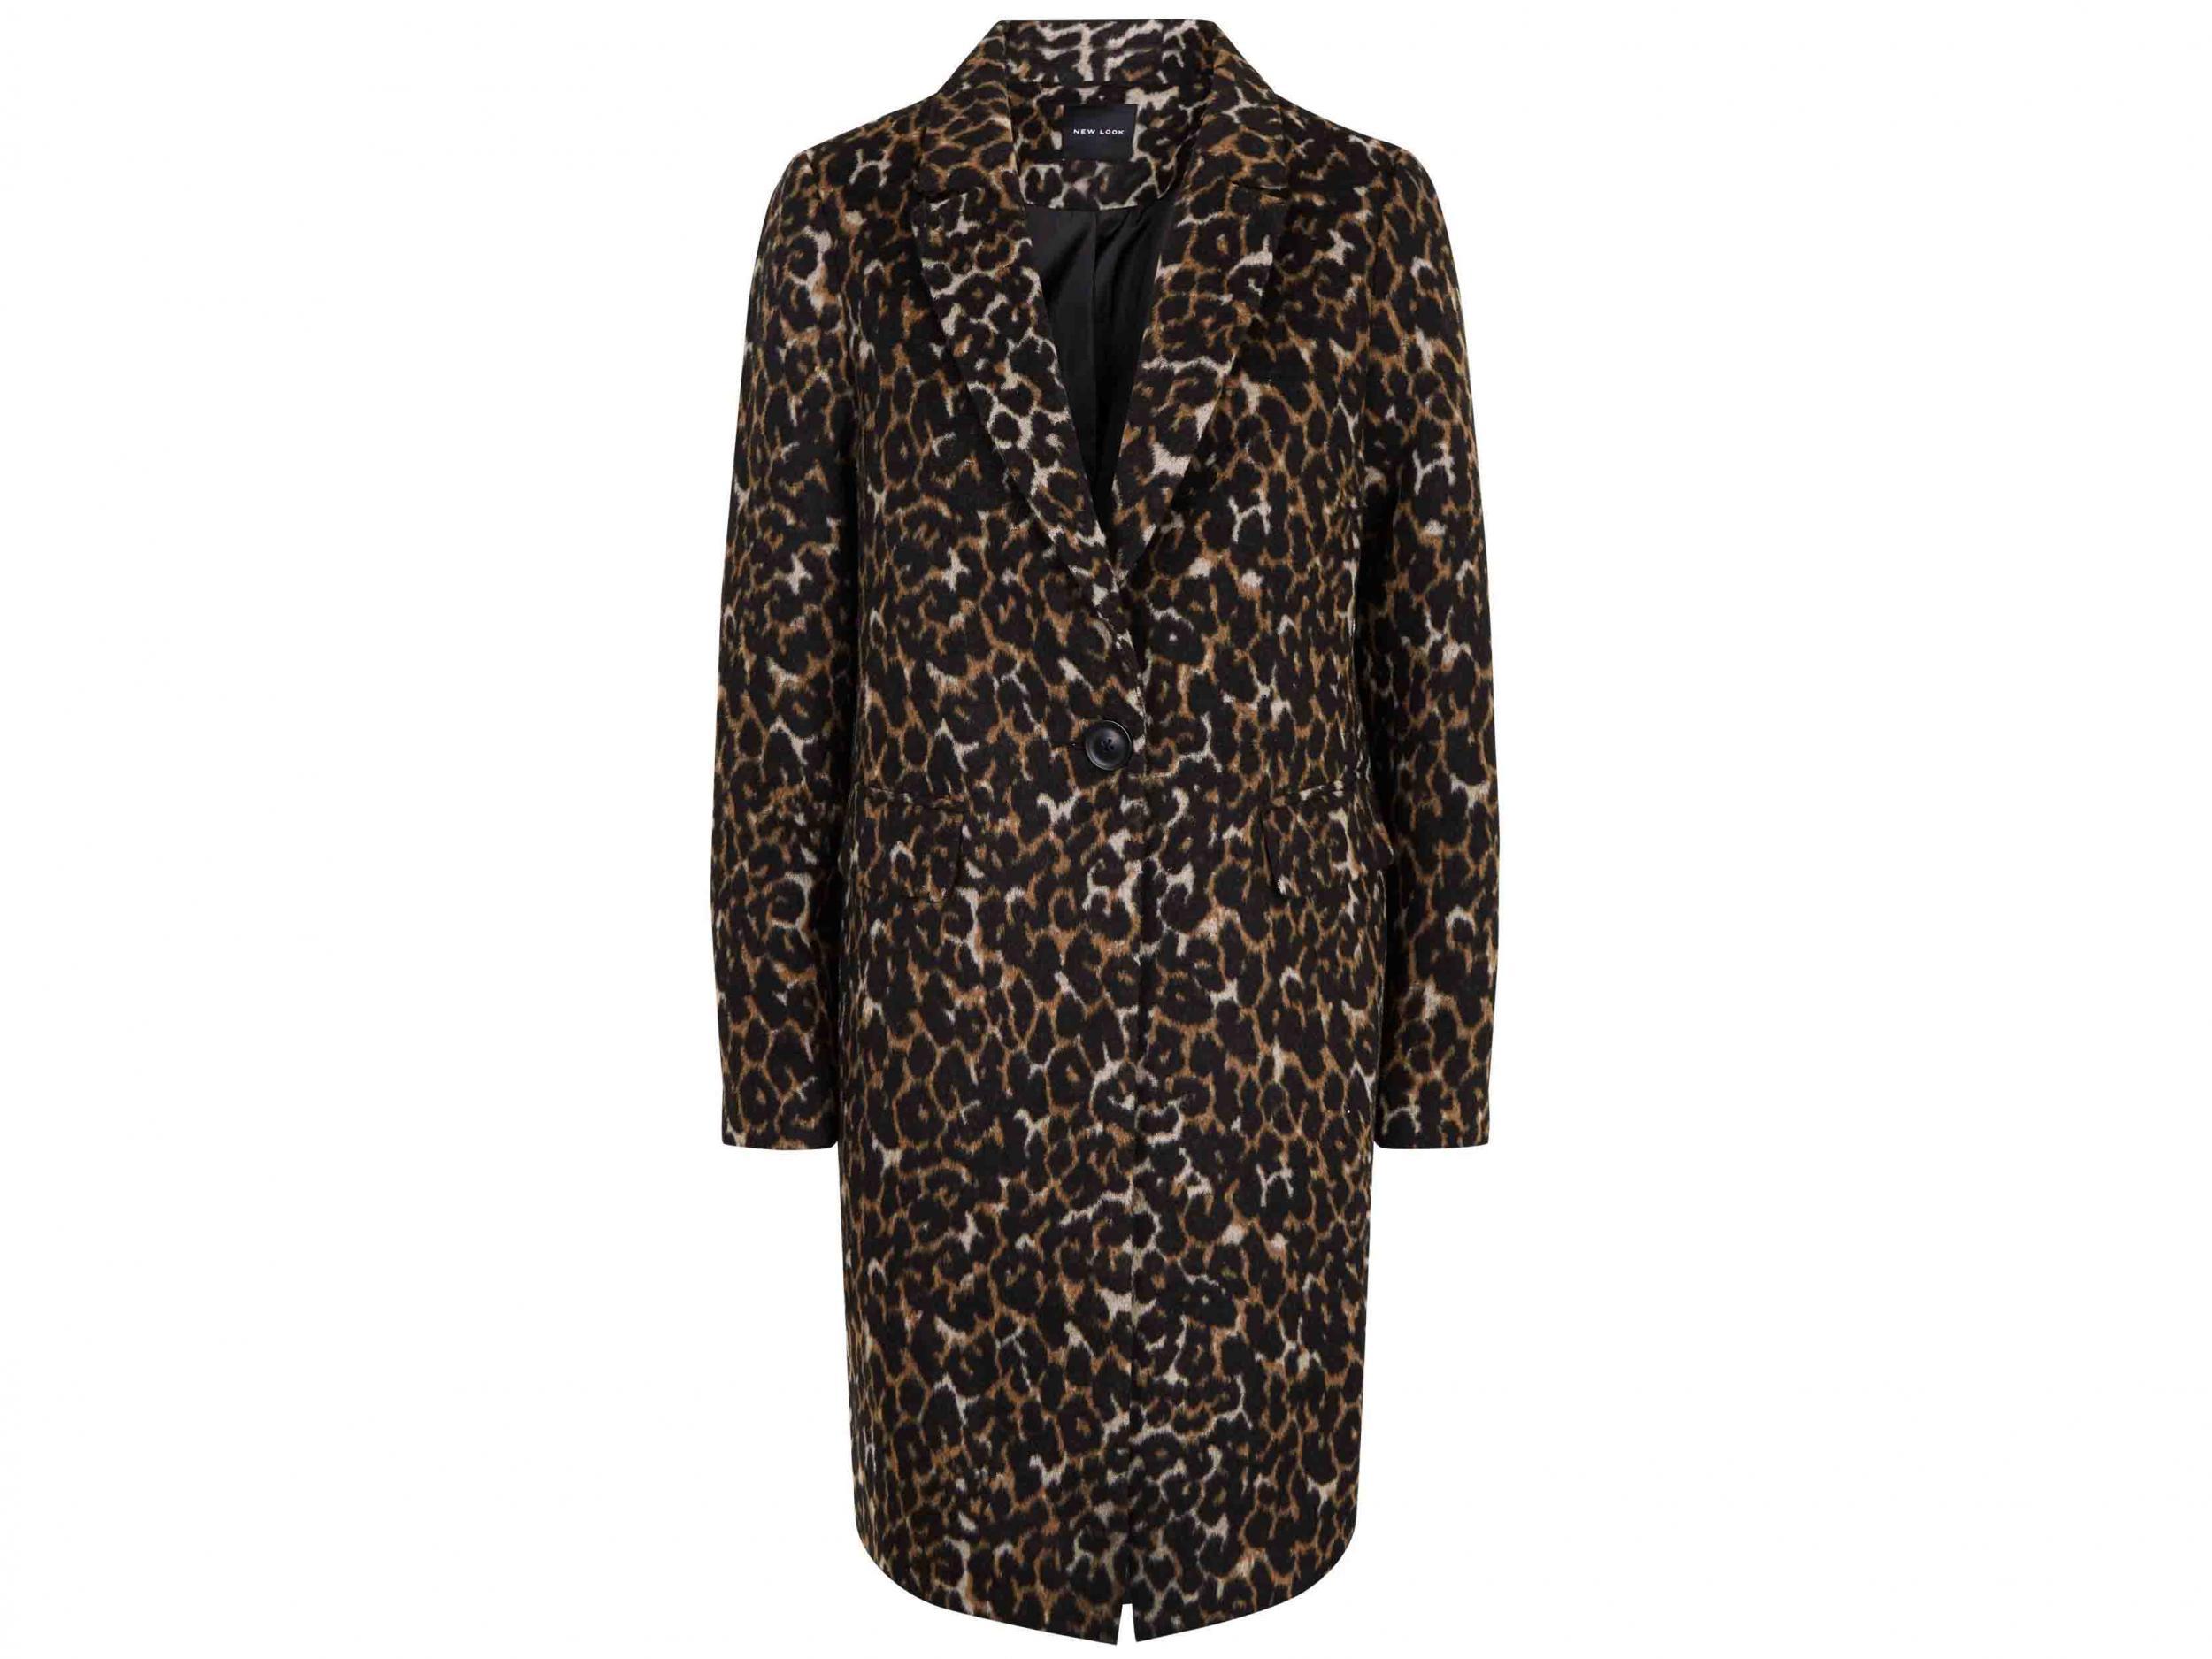 Brown leopard print longline coat, £39.99, New Look